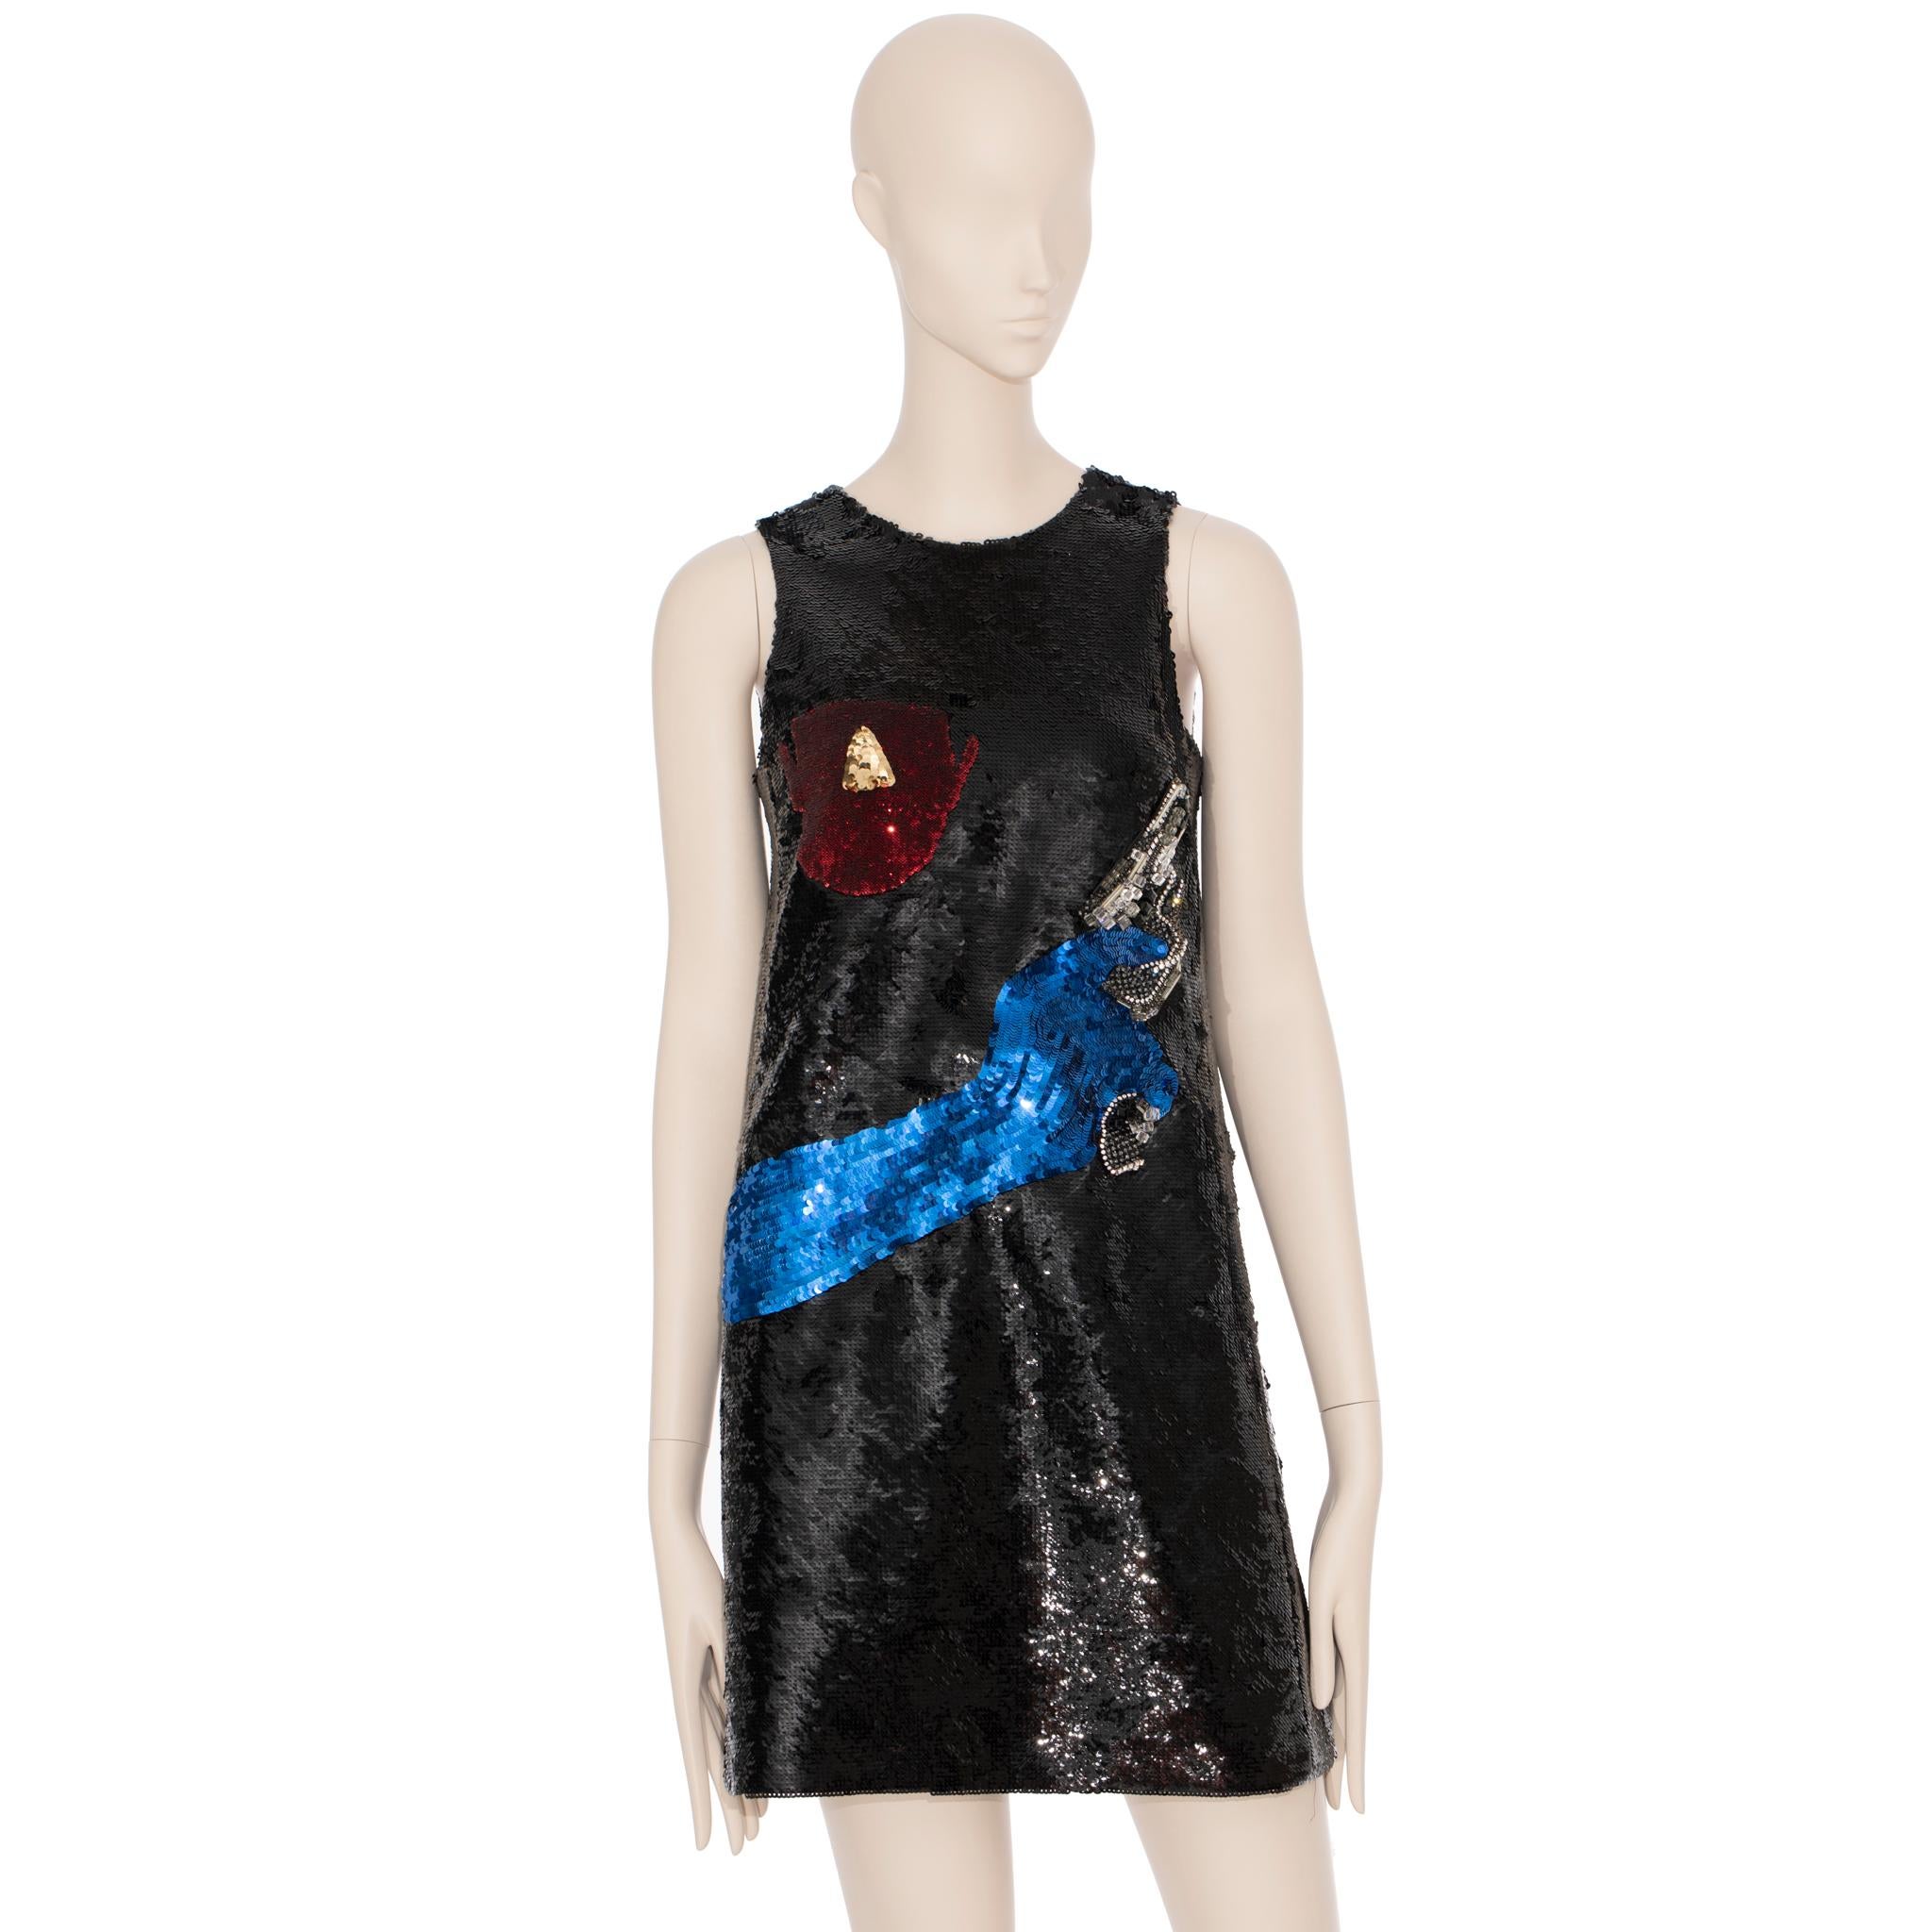 Saint Laurent X John Baldessari by Hedi Slimane Sequin Mini Dress Look #13 For Sale 5